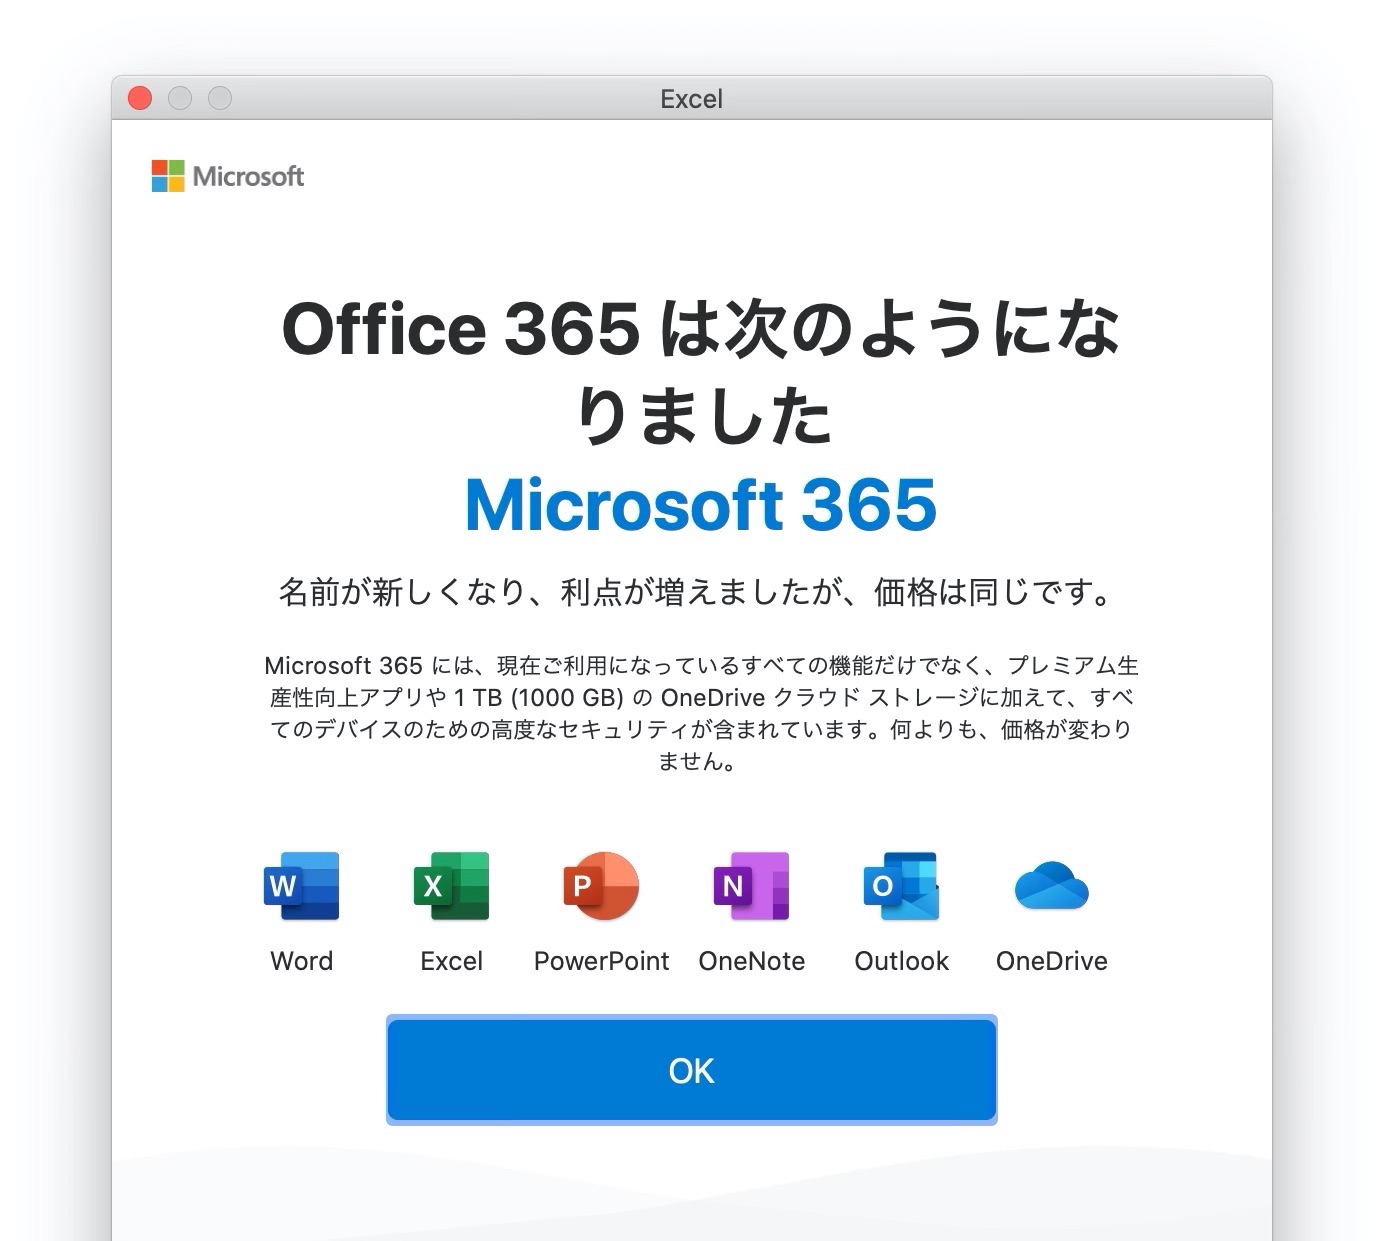 Microsoft 365 for Mac